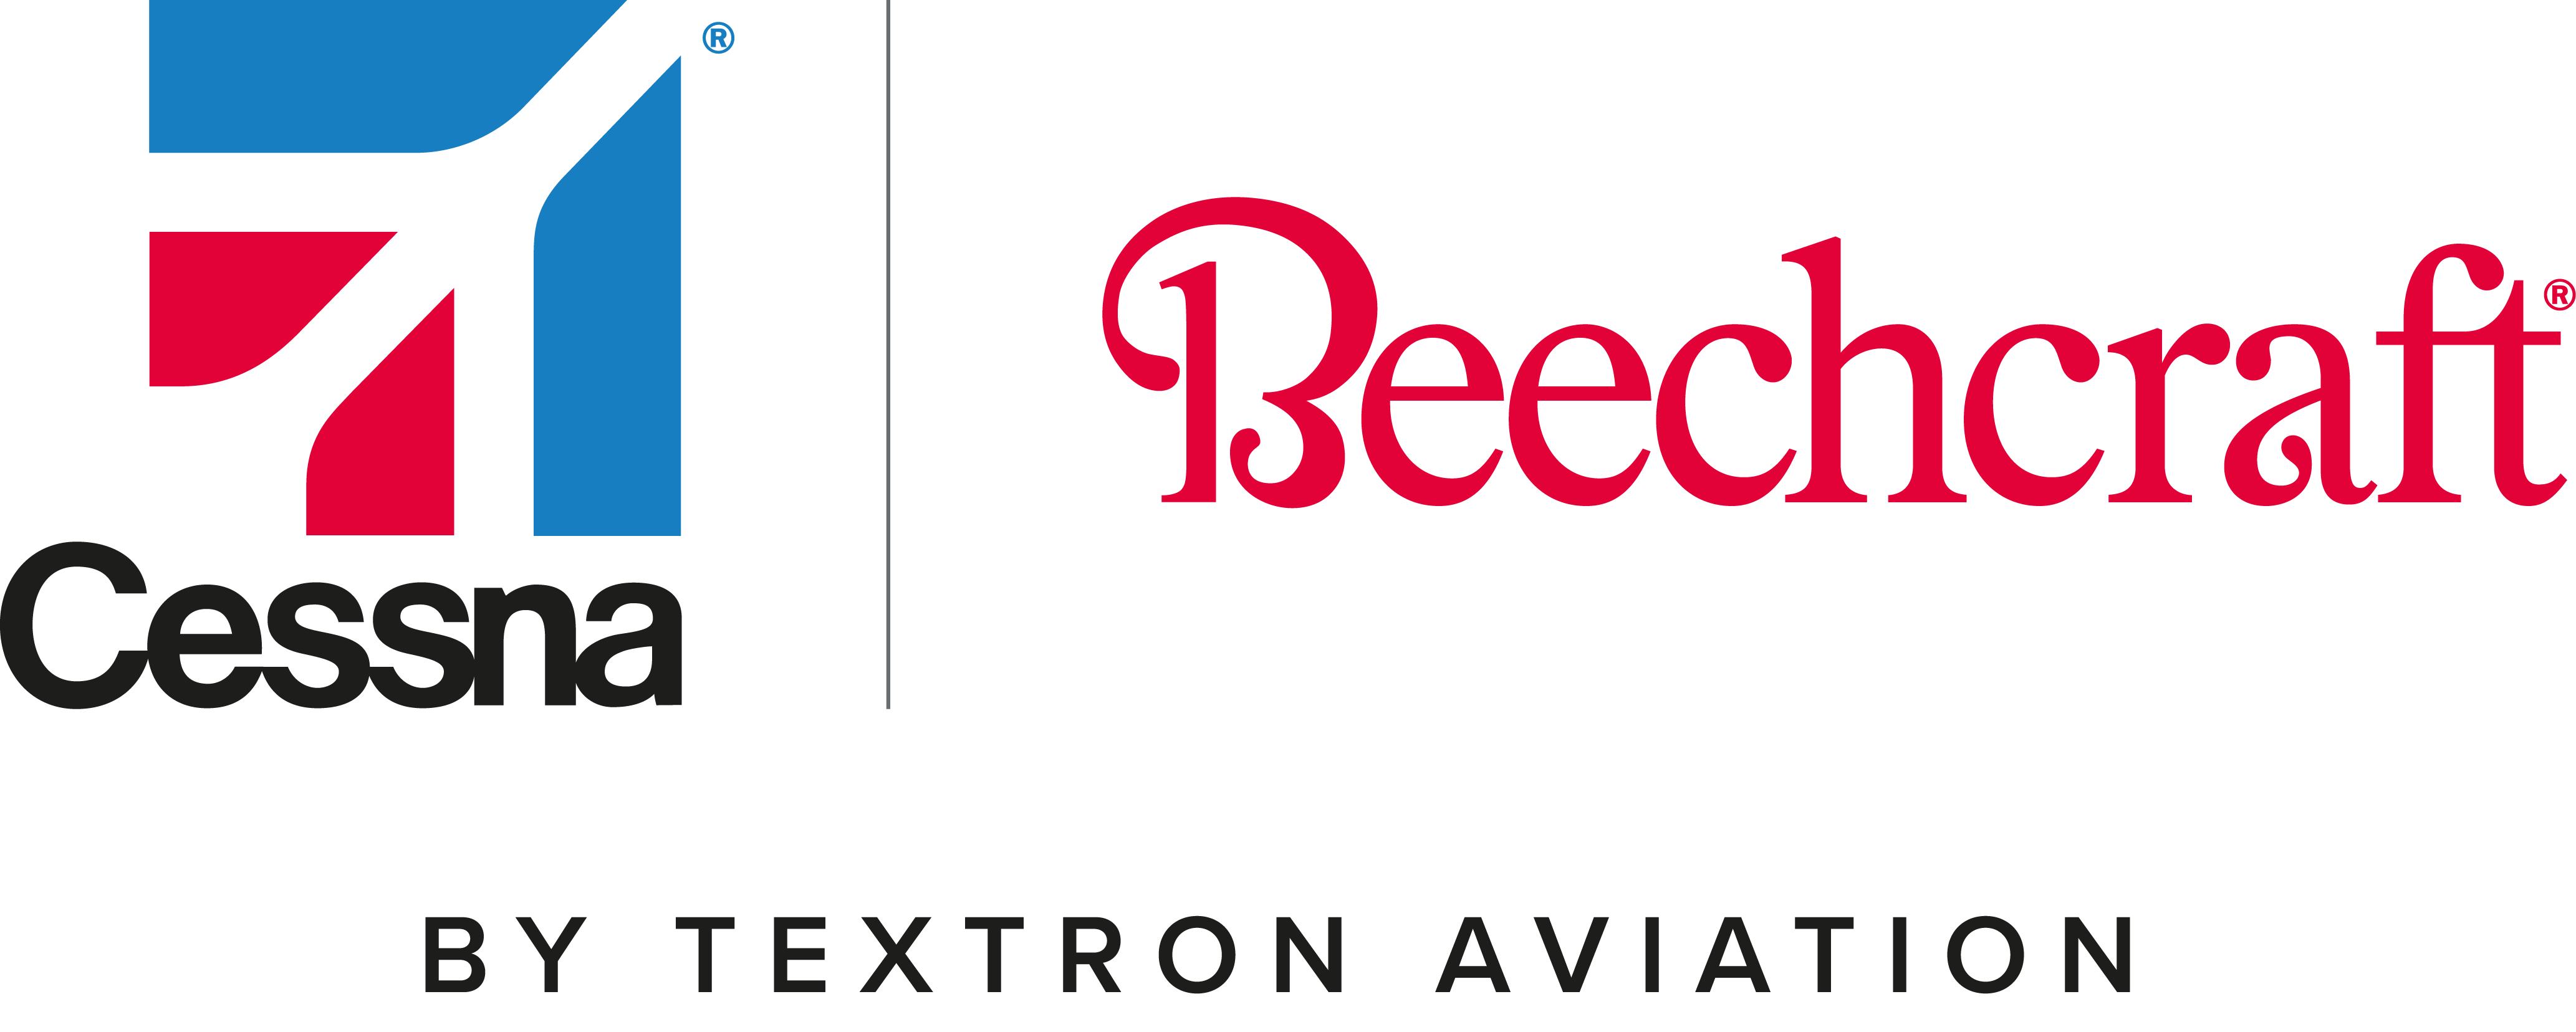 Cessna_Beechcraft_Textron_Aviation Logo